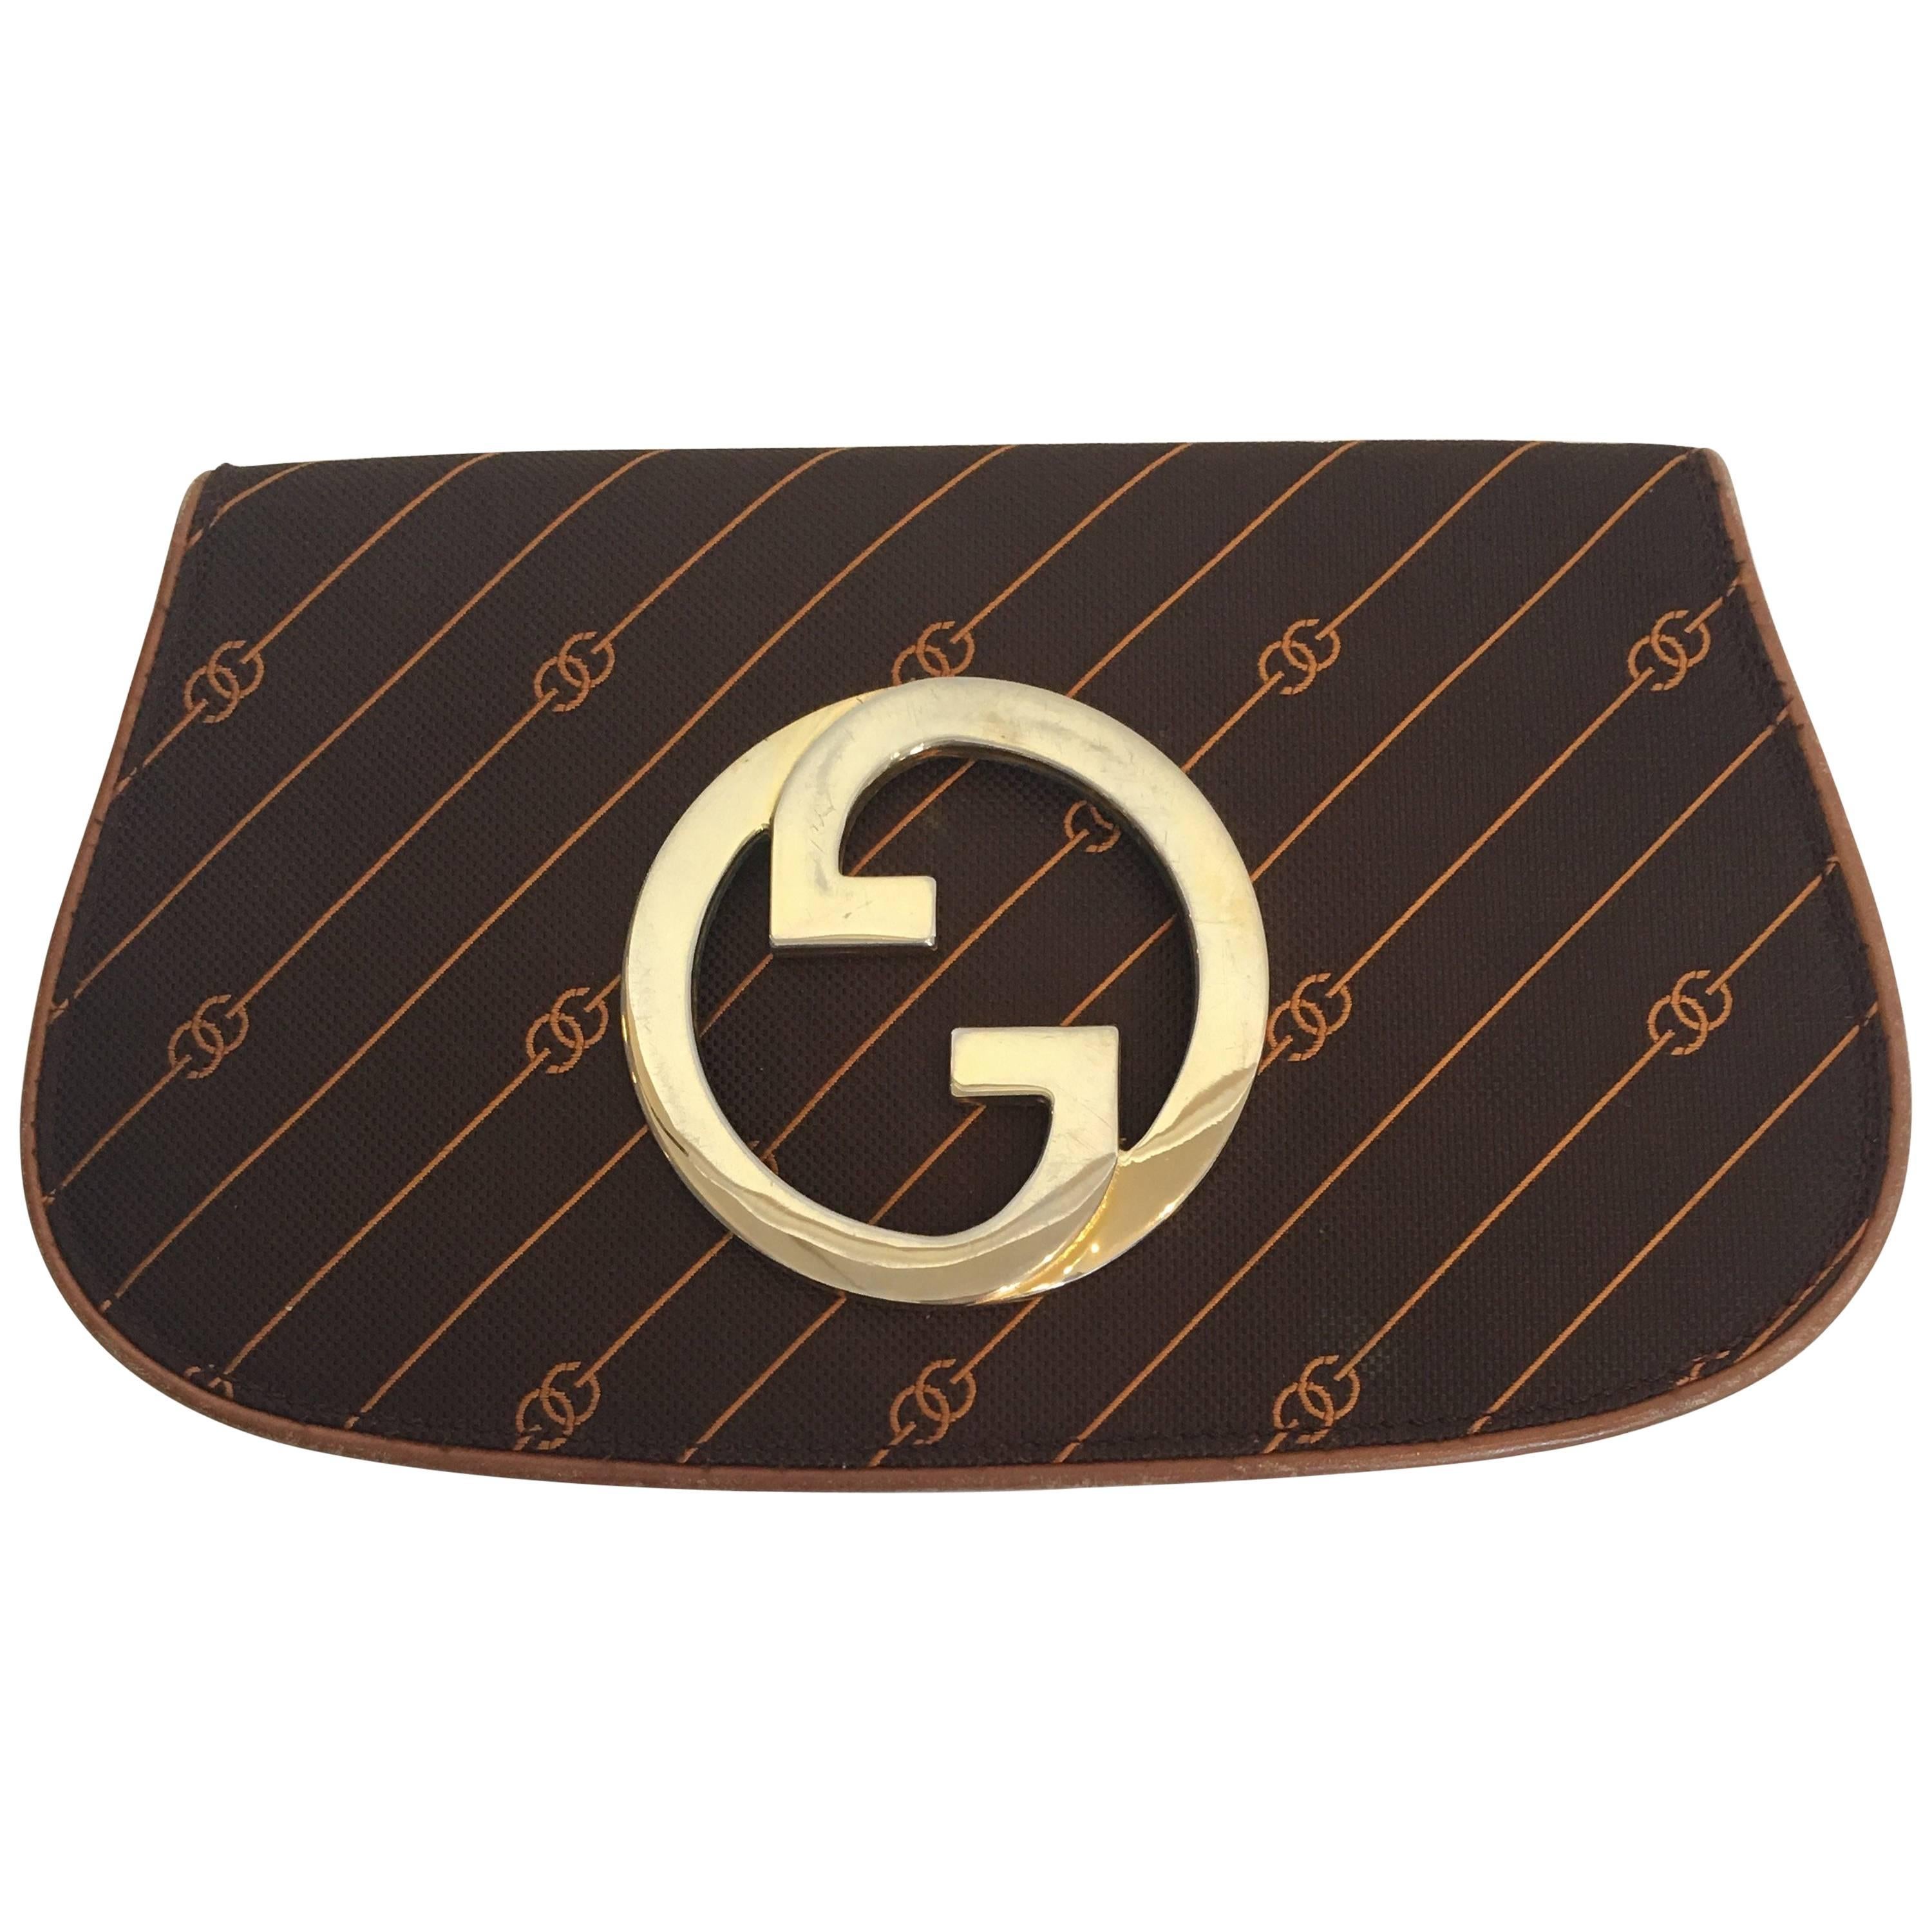  Gucci 1980's Brown Logo Clutch w/ Gold Emblem